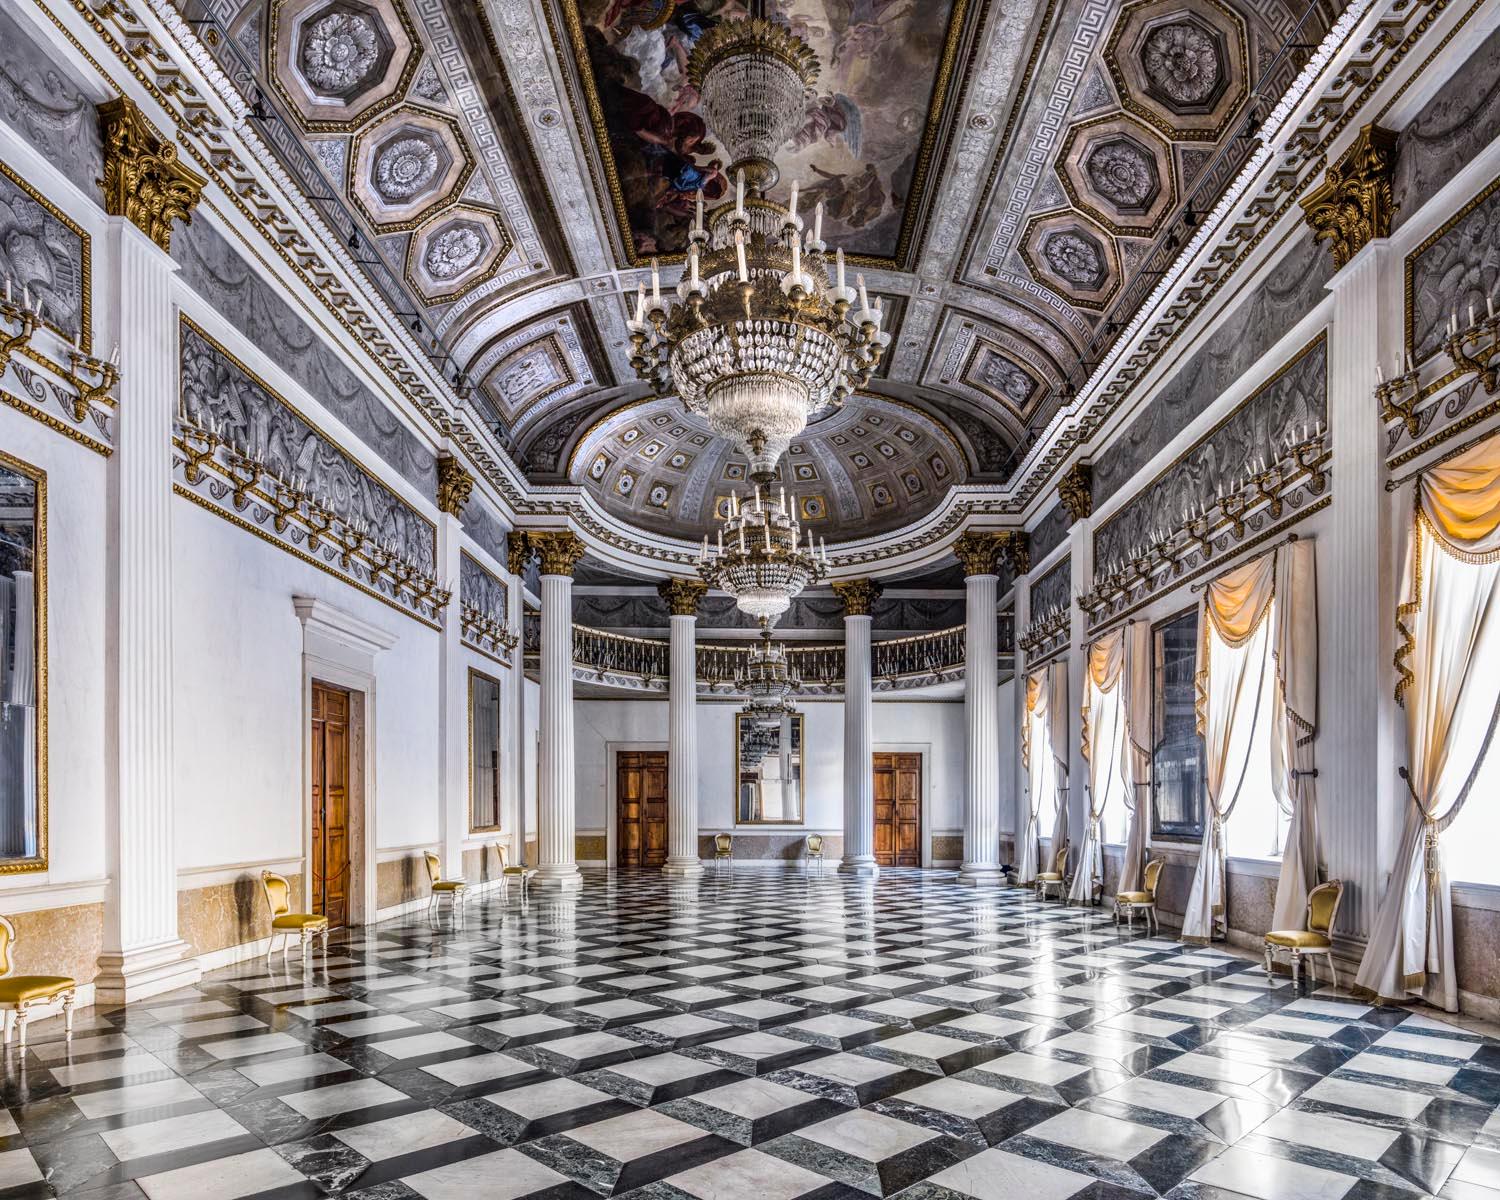 Palazzo Reale, Venice, Italy (Portrait of Interiors, Photography)